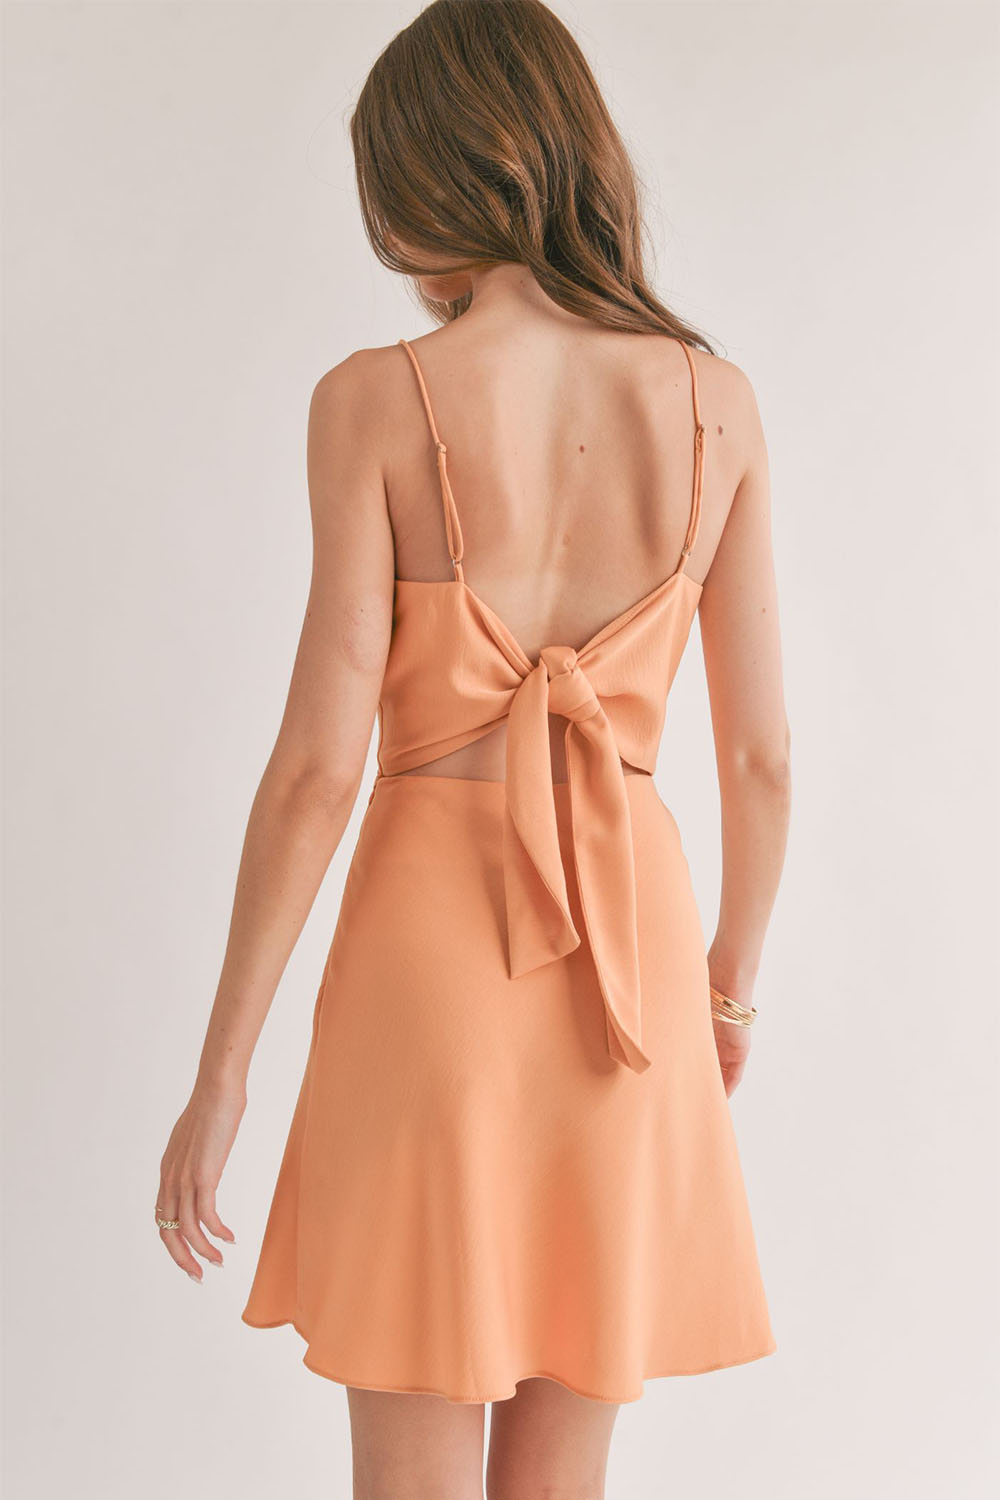 Sage the Label - Jess Mini Dress - Apricot - Back